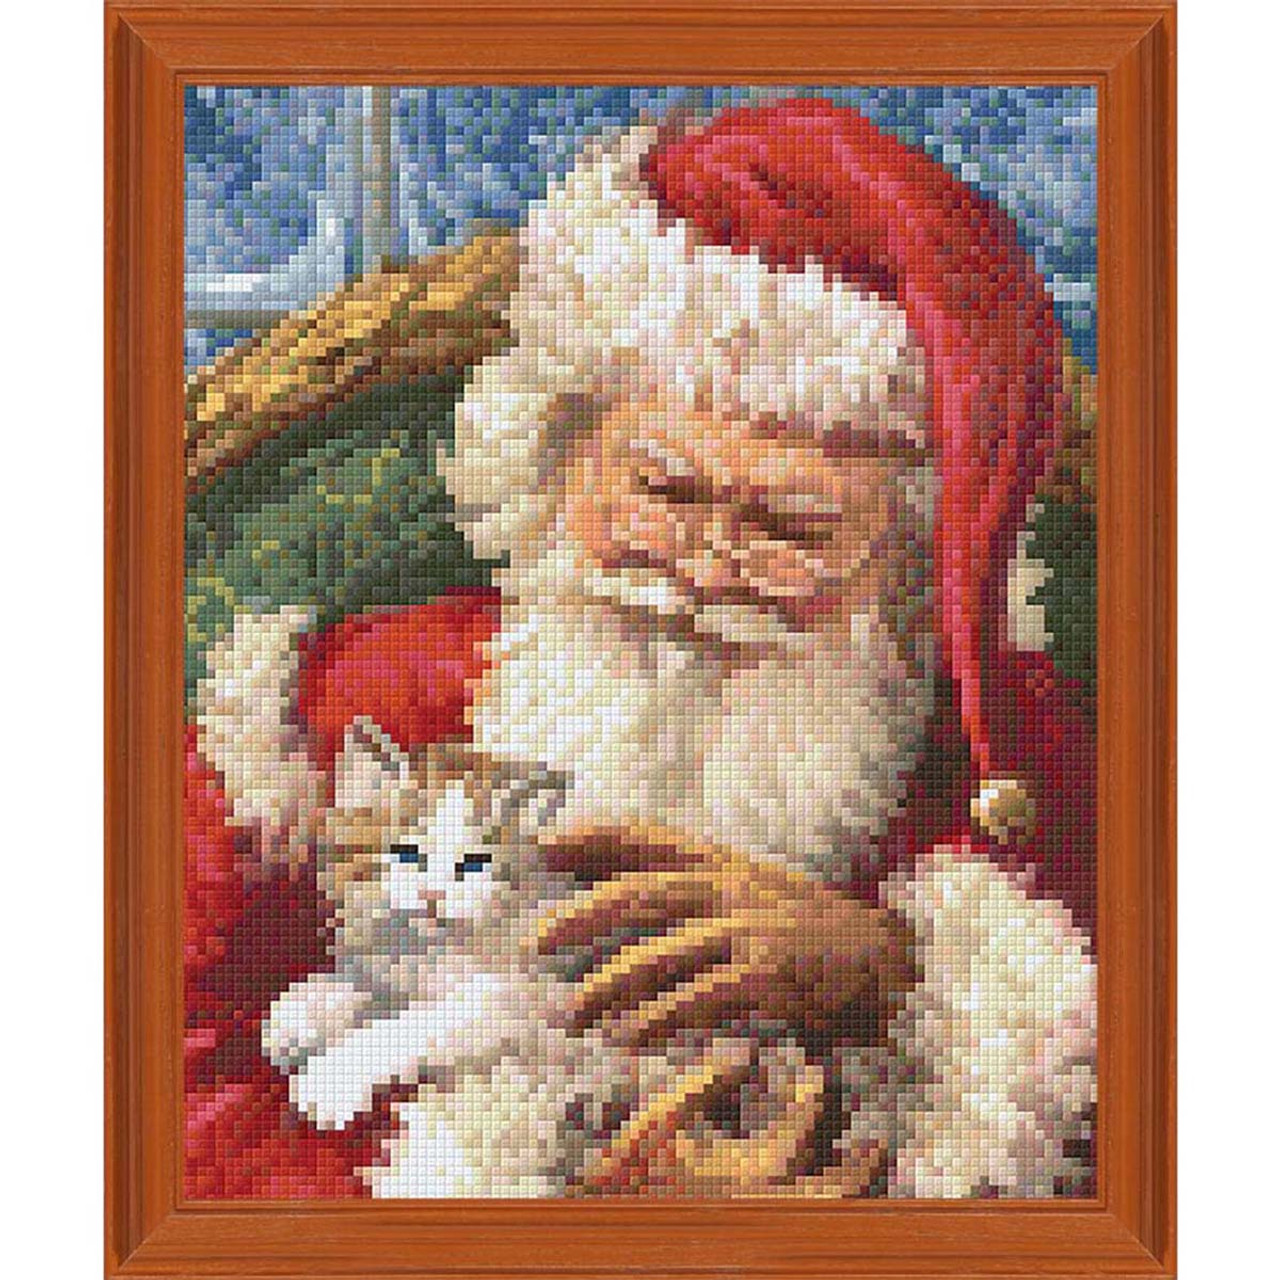 Christmas Precut Quilting Fabric Squares Santa Claus Snowman Print